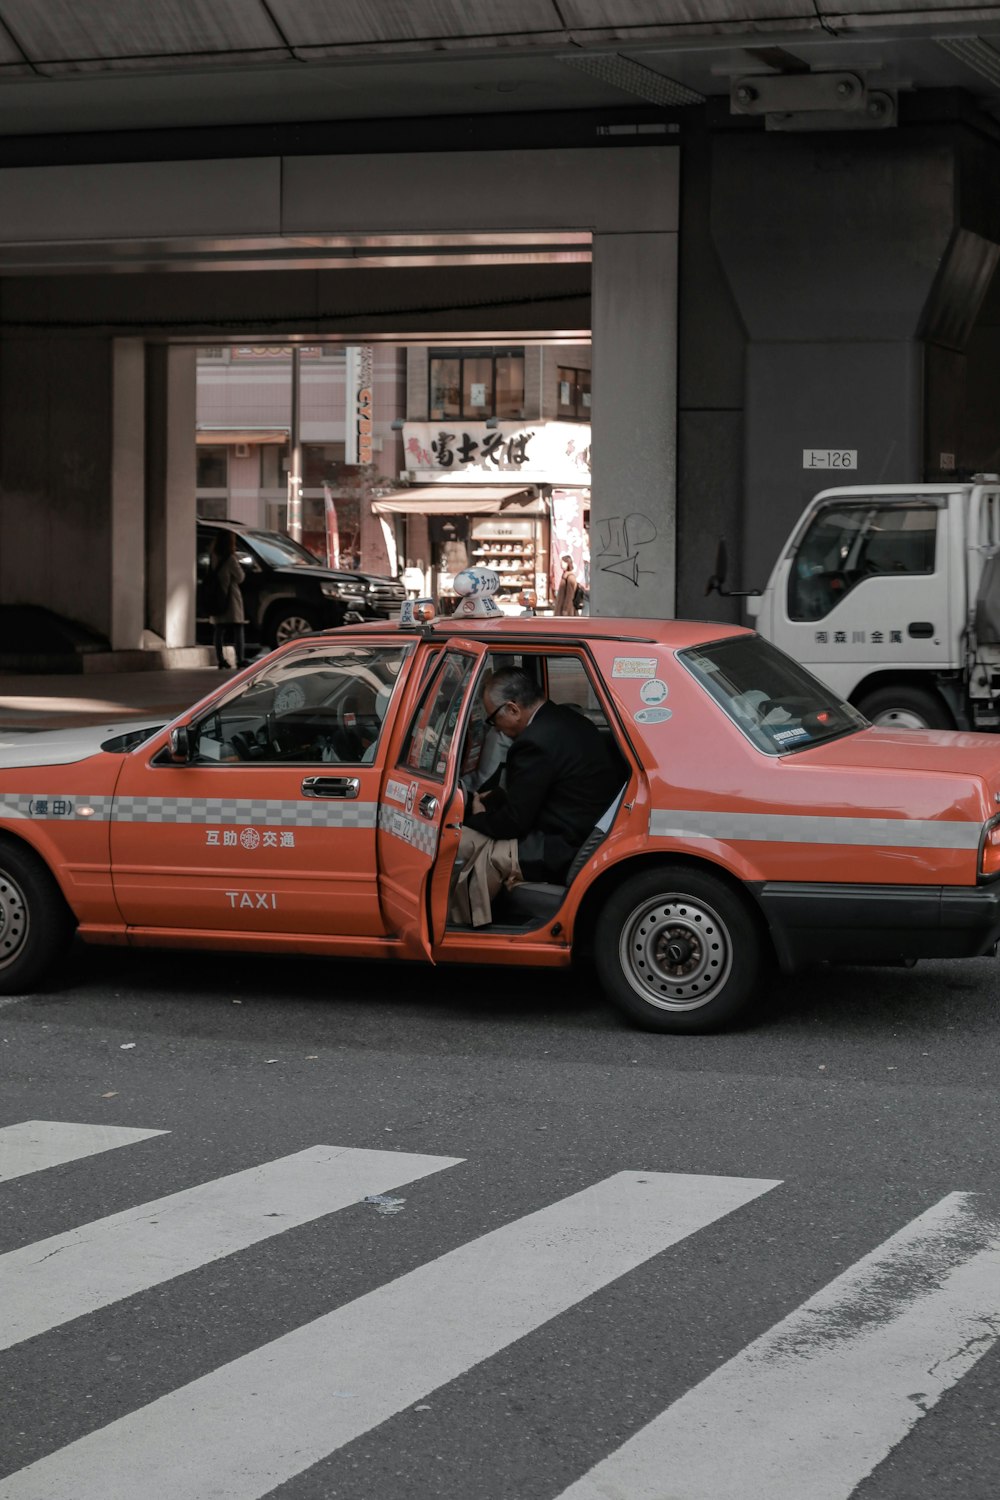 orange and black car on road during daytime